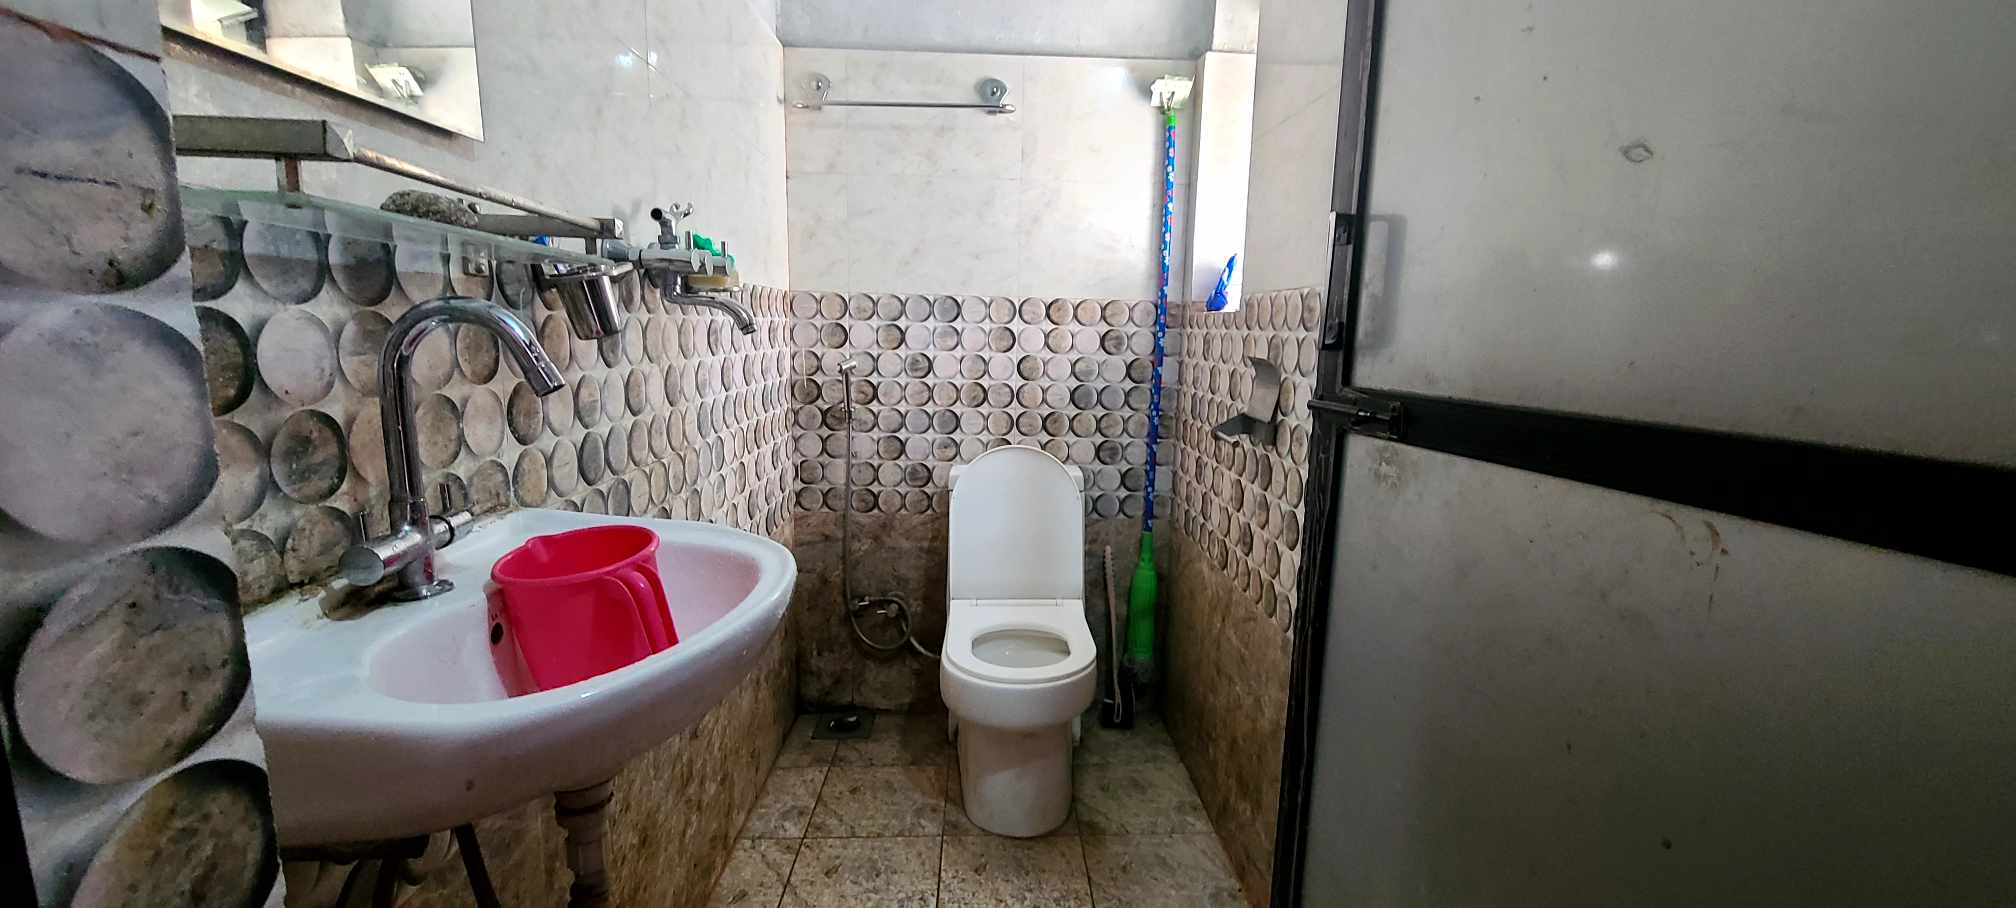 Room for rent in Kathmandu – Rs 4700